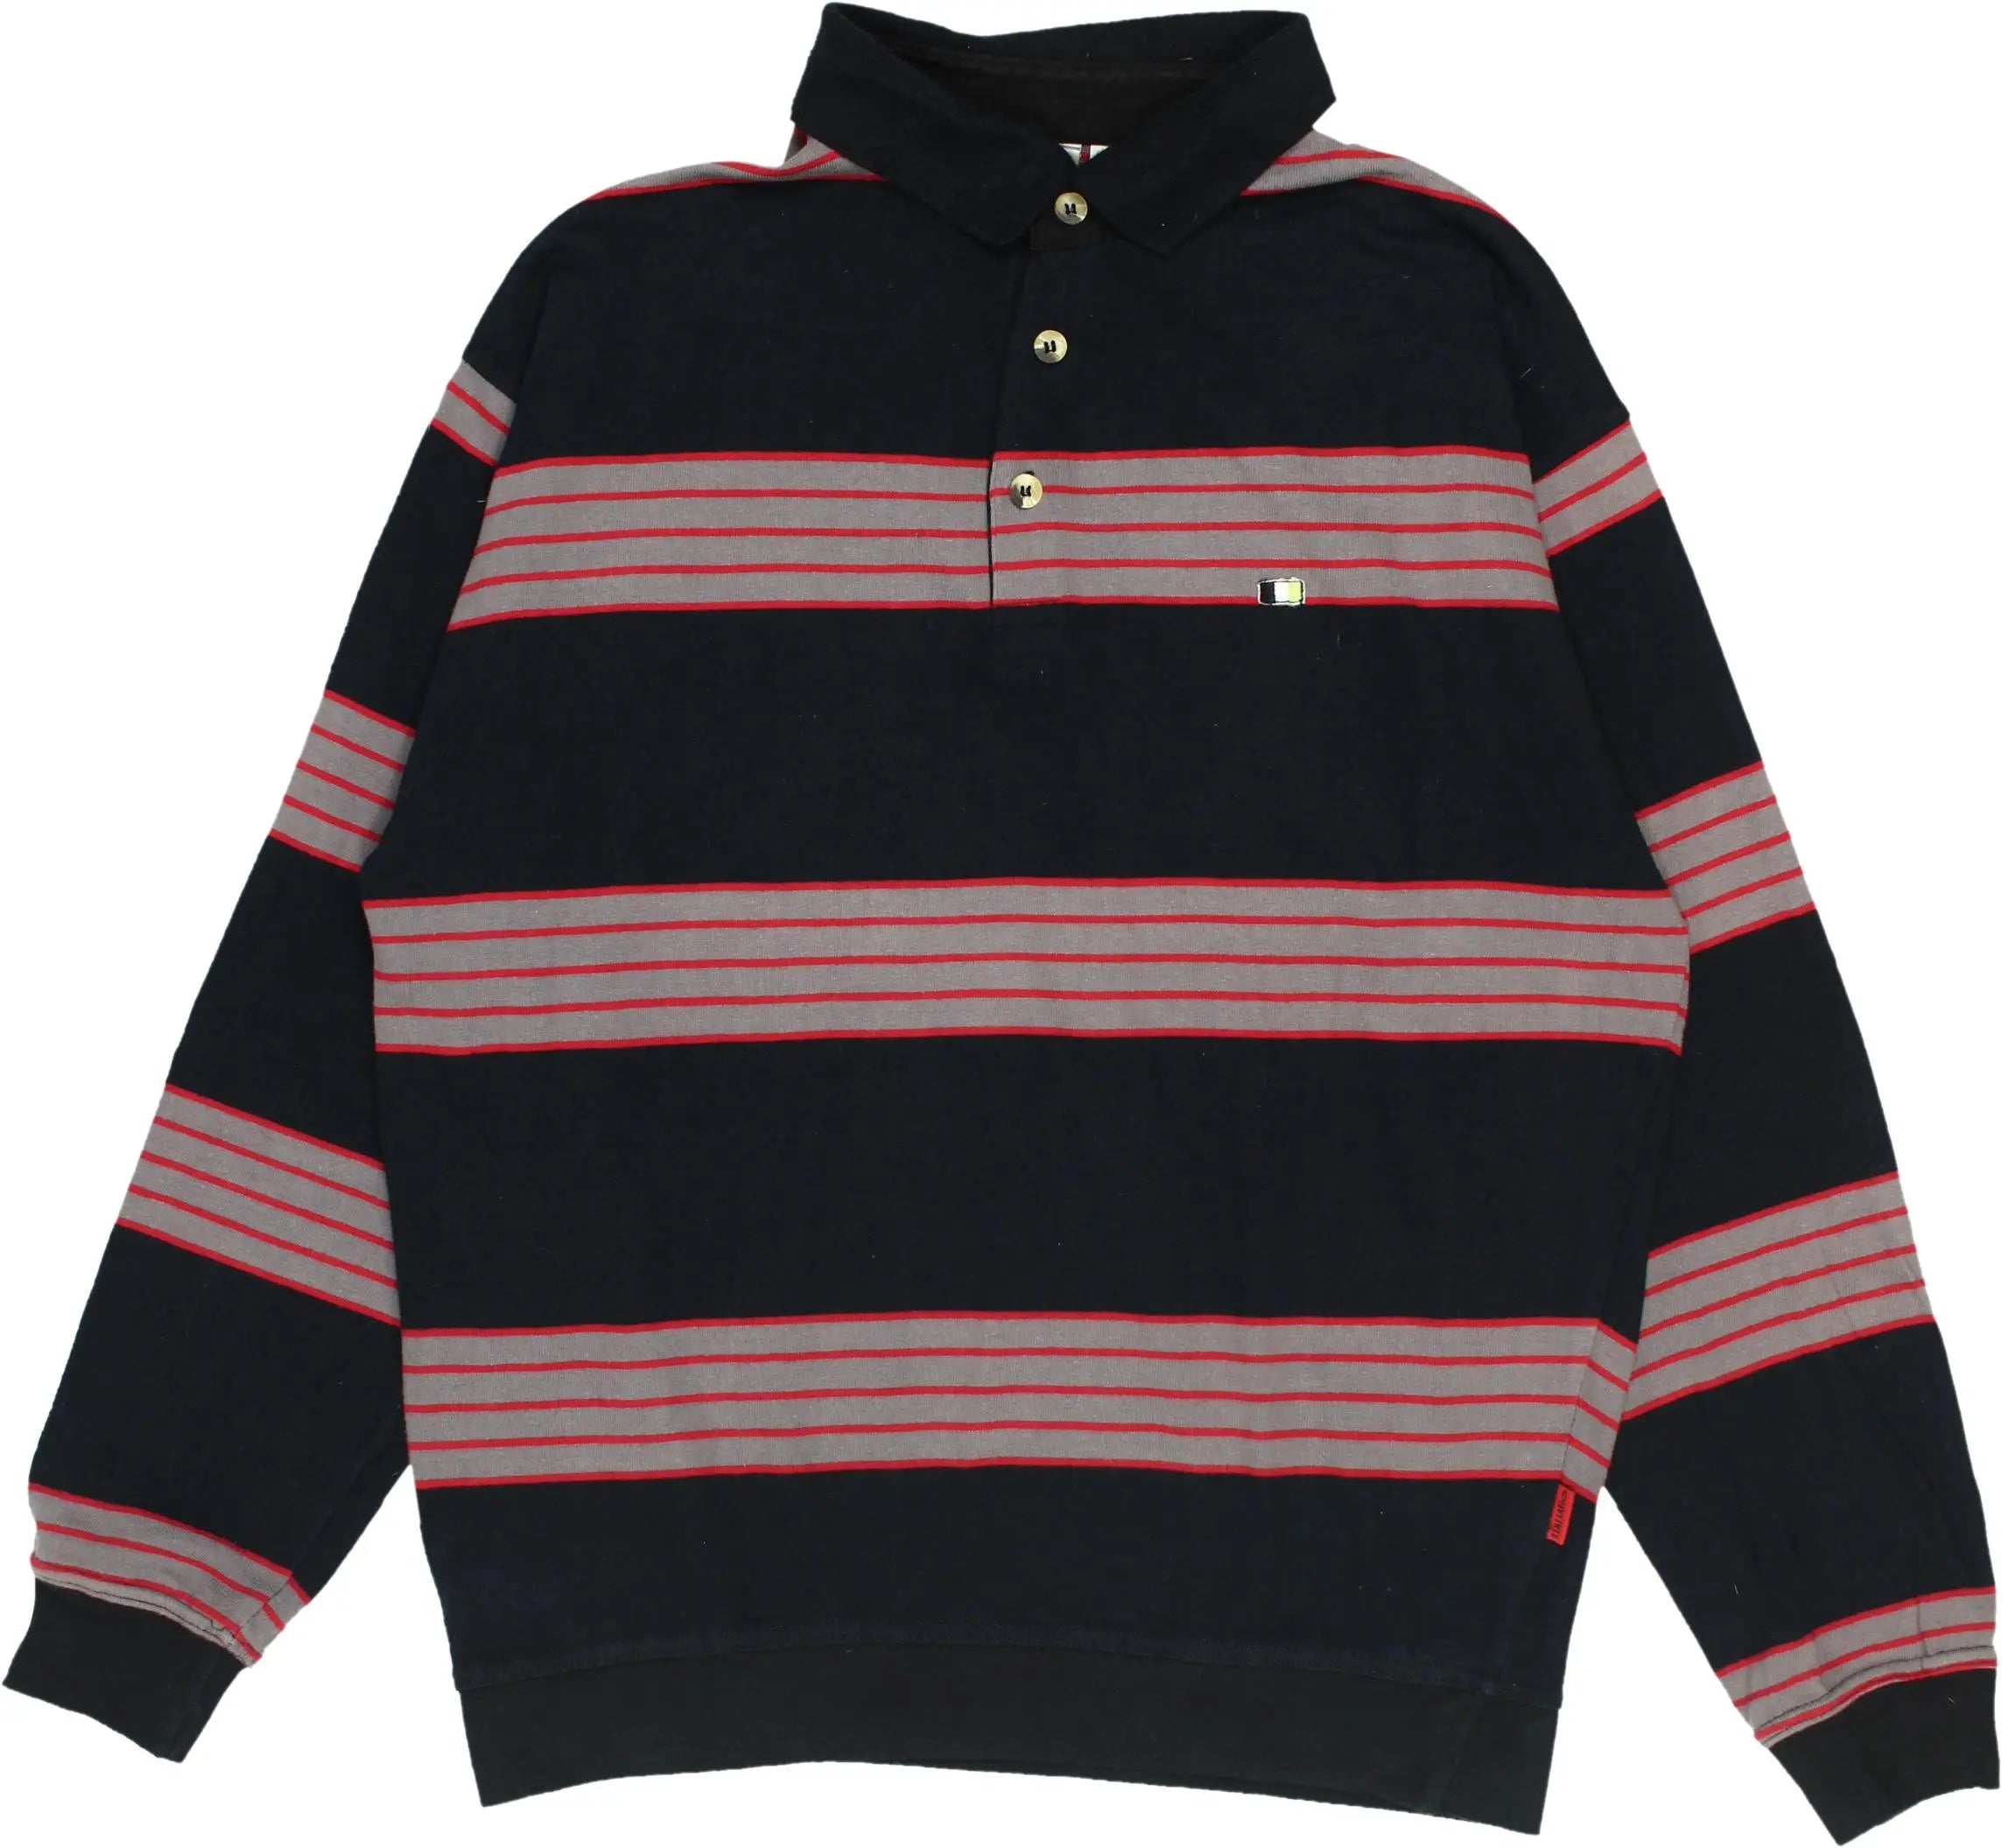 Portonova - Long Sleeve Polo Shirt- ThriftTale.com - Vintage and second handclothing